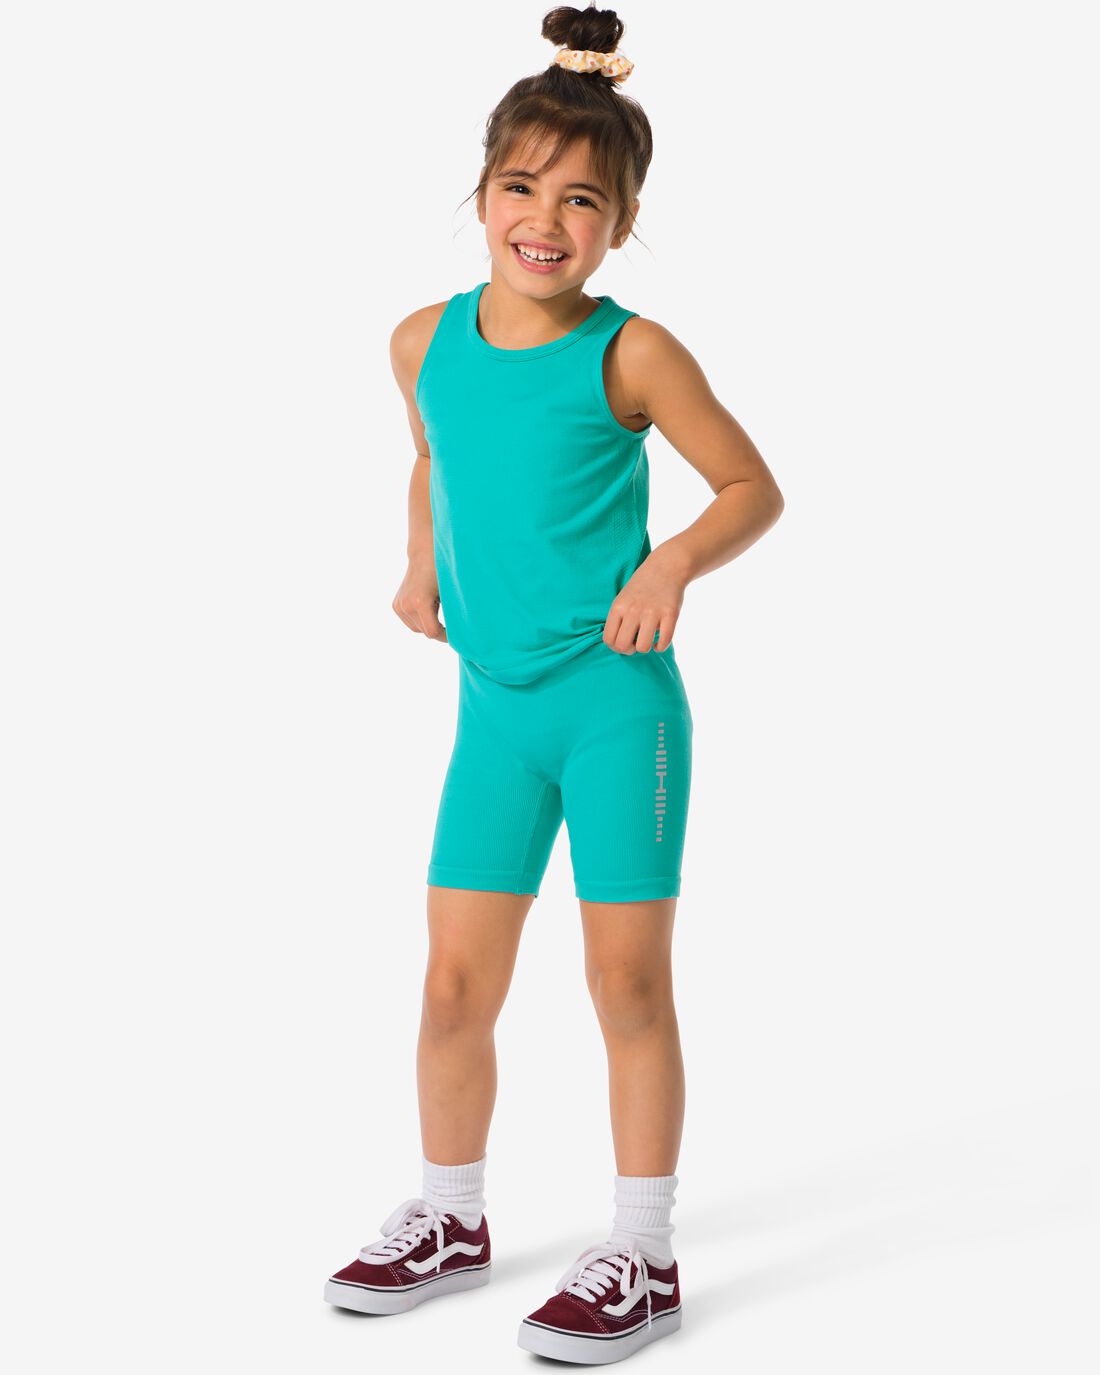 HEMA Kinder Korte Sportlegging Naadloos Turquoise (turquoise)